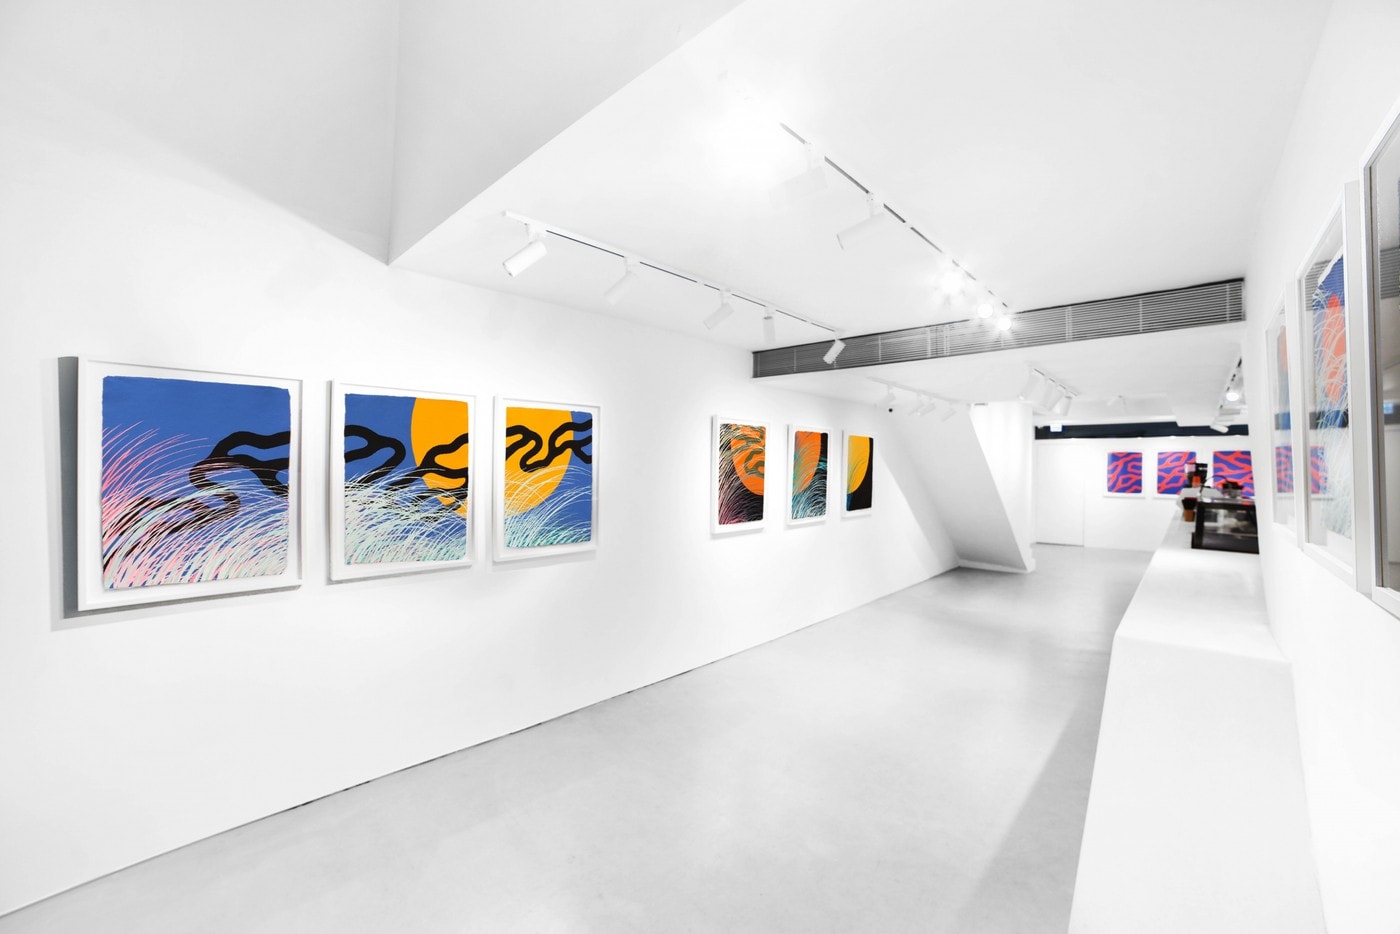 Sam Friedman Features Rockaway Beach in His Solo "FANTASY" Exhibition art painting hong kong cultural artwork Woaw New York 